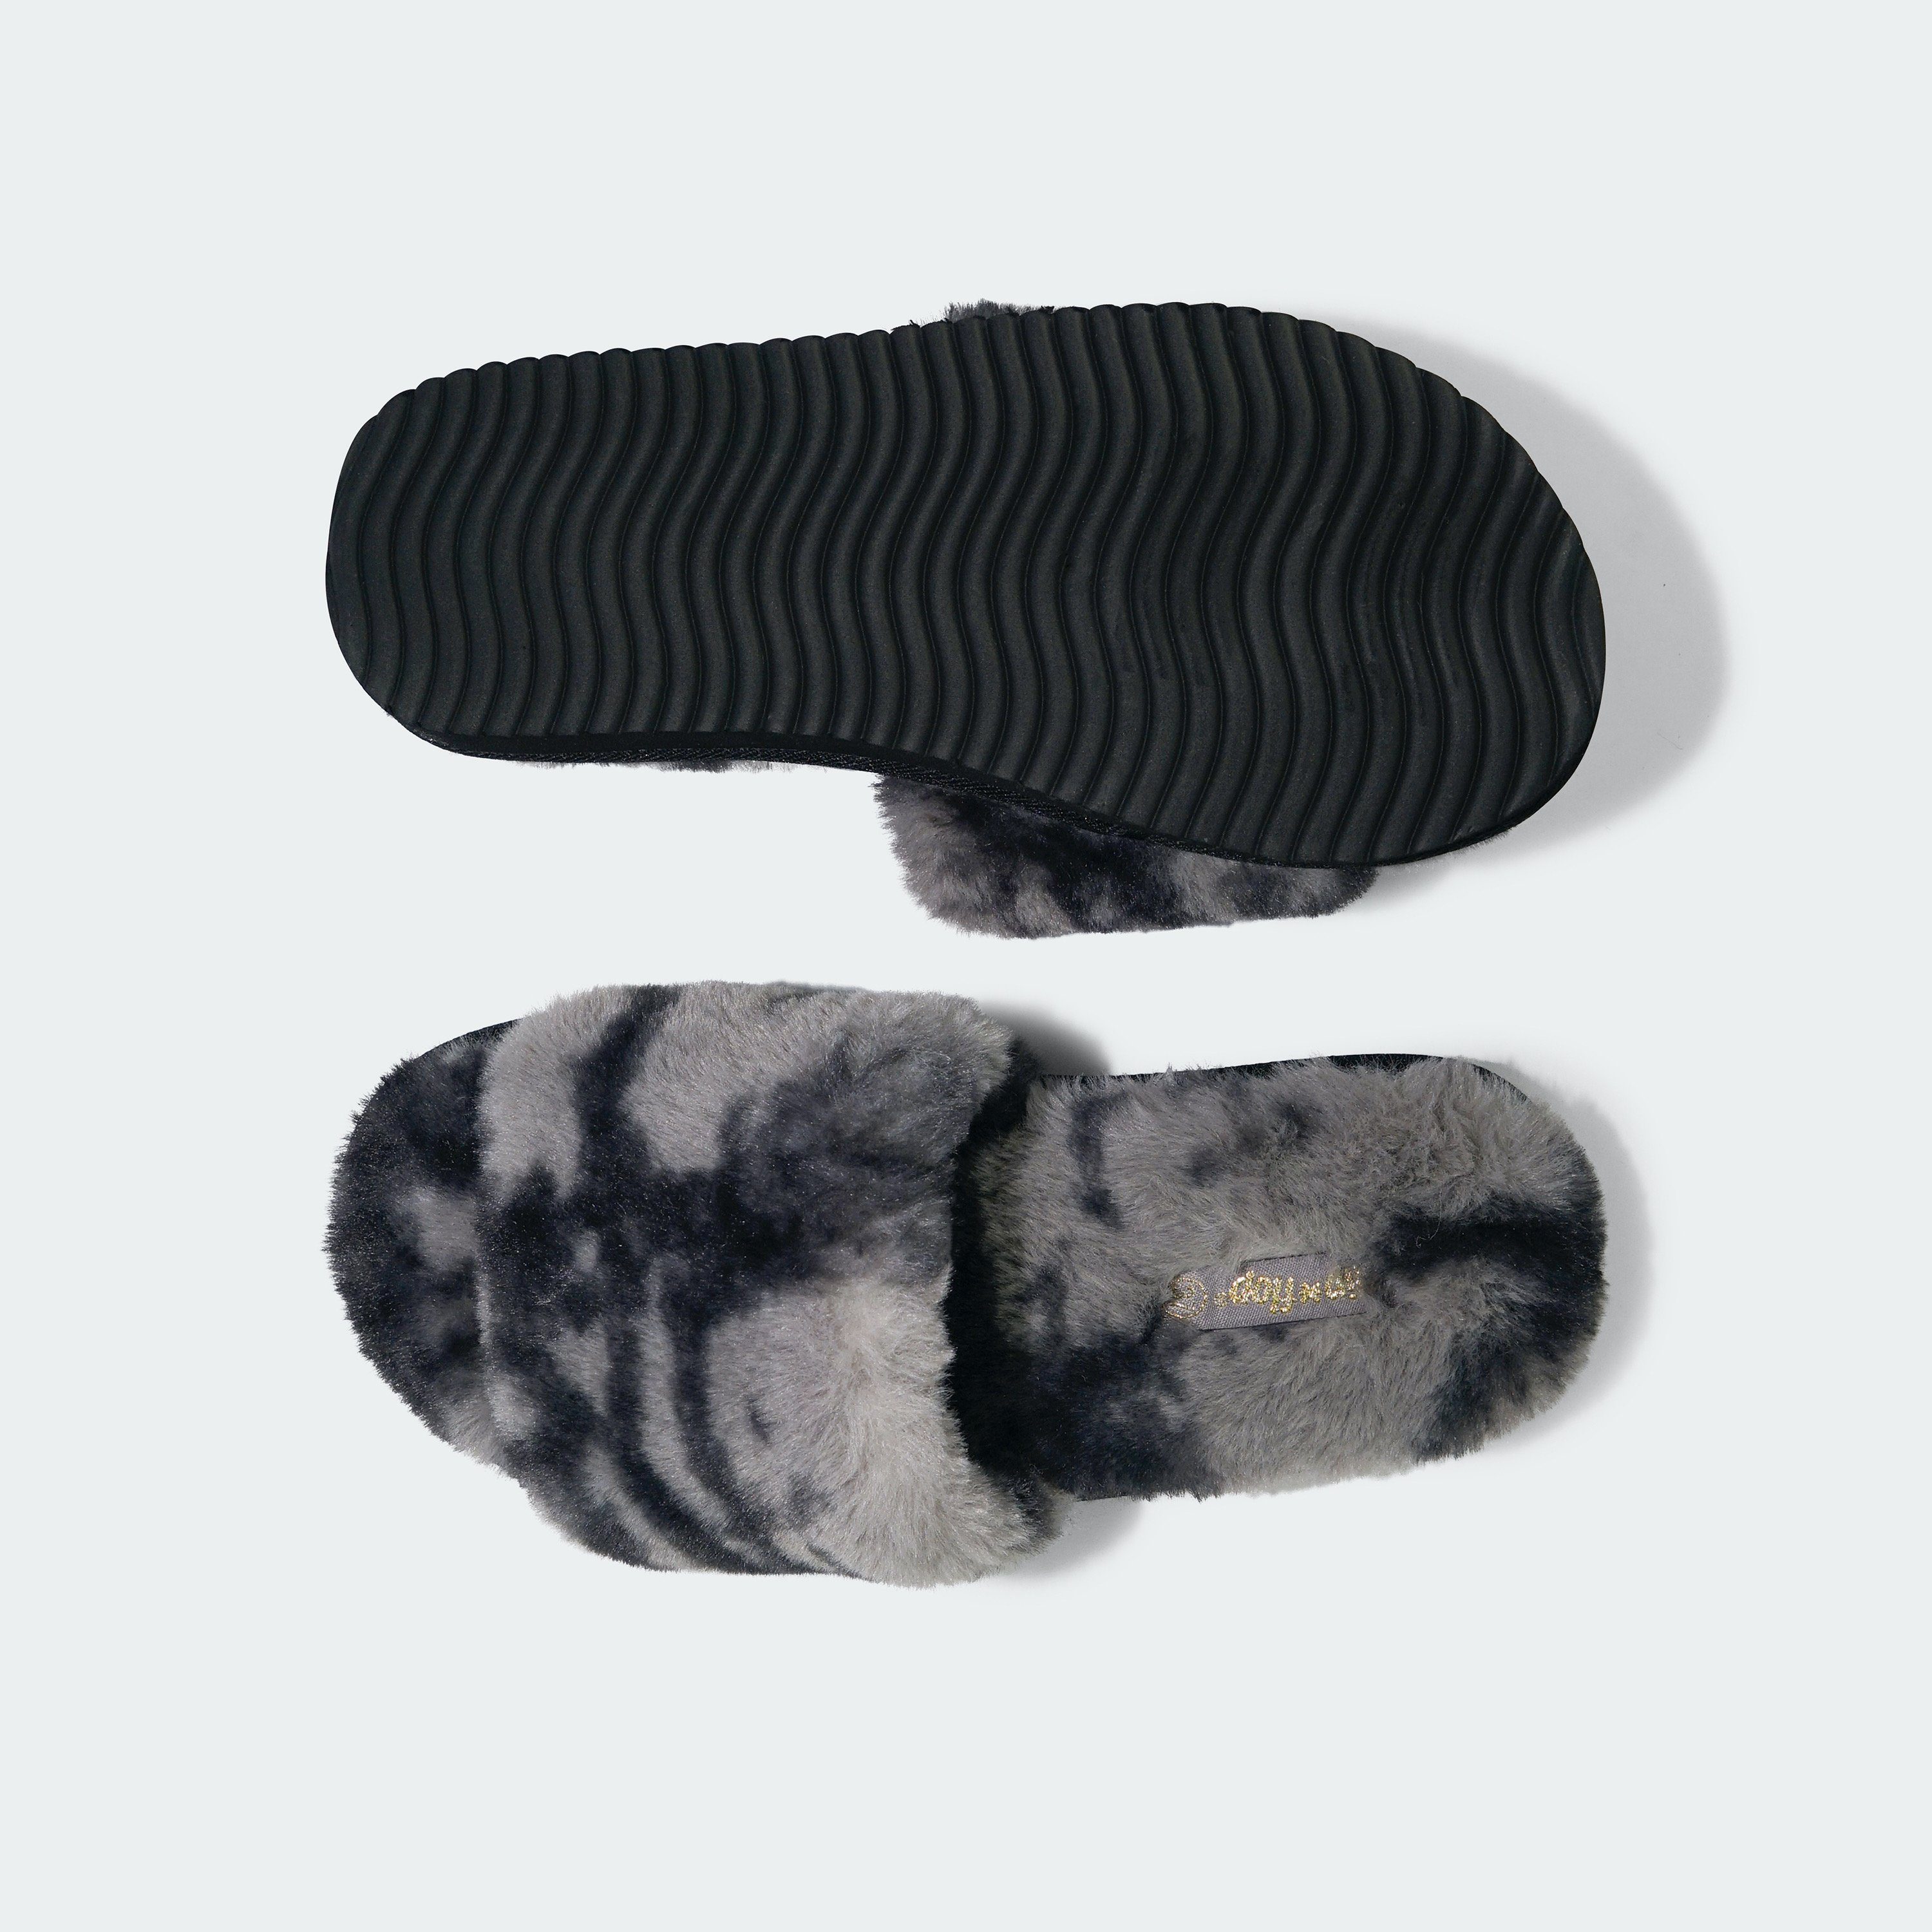 mit 2 tone Flop Flip Effekt schwarz 2-tone trendigem slide*fur Pantoffel